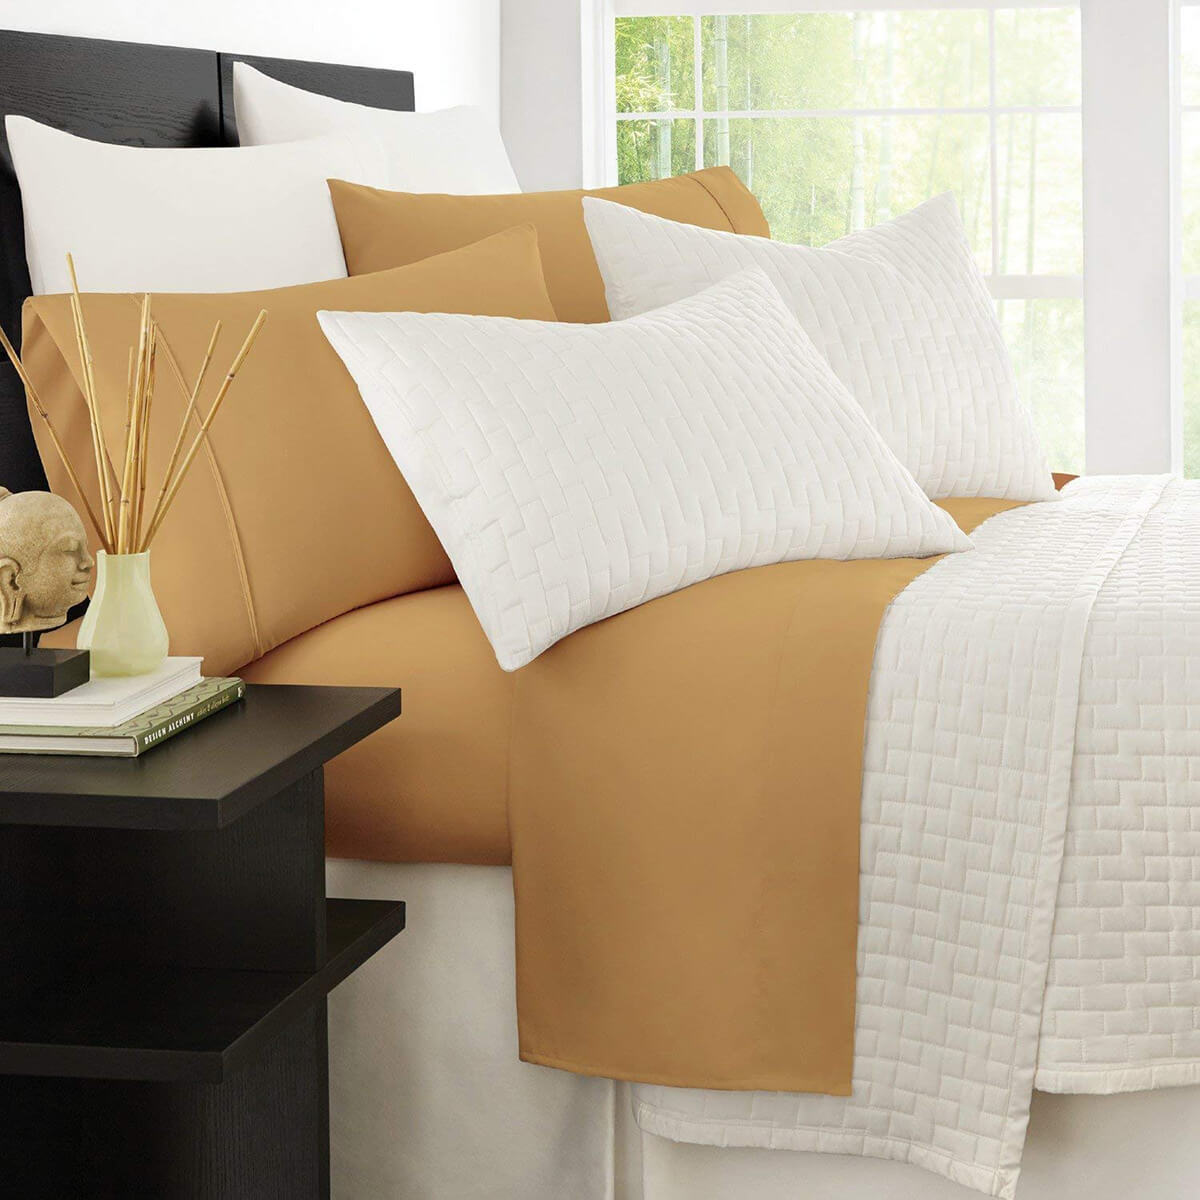 Zen Bamboo Luxury Bed Sheets